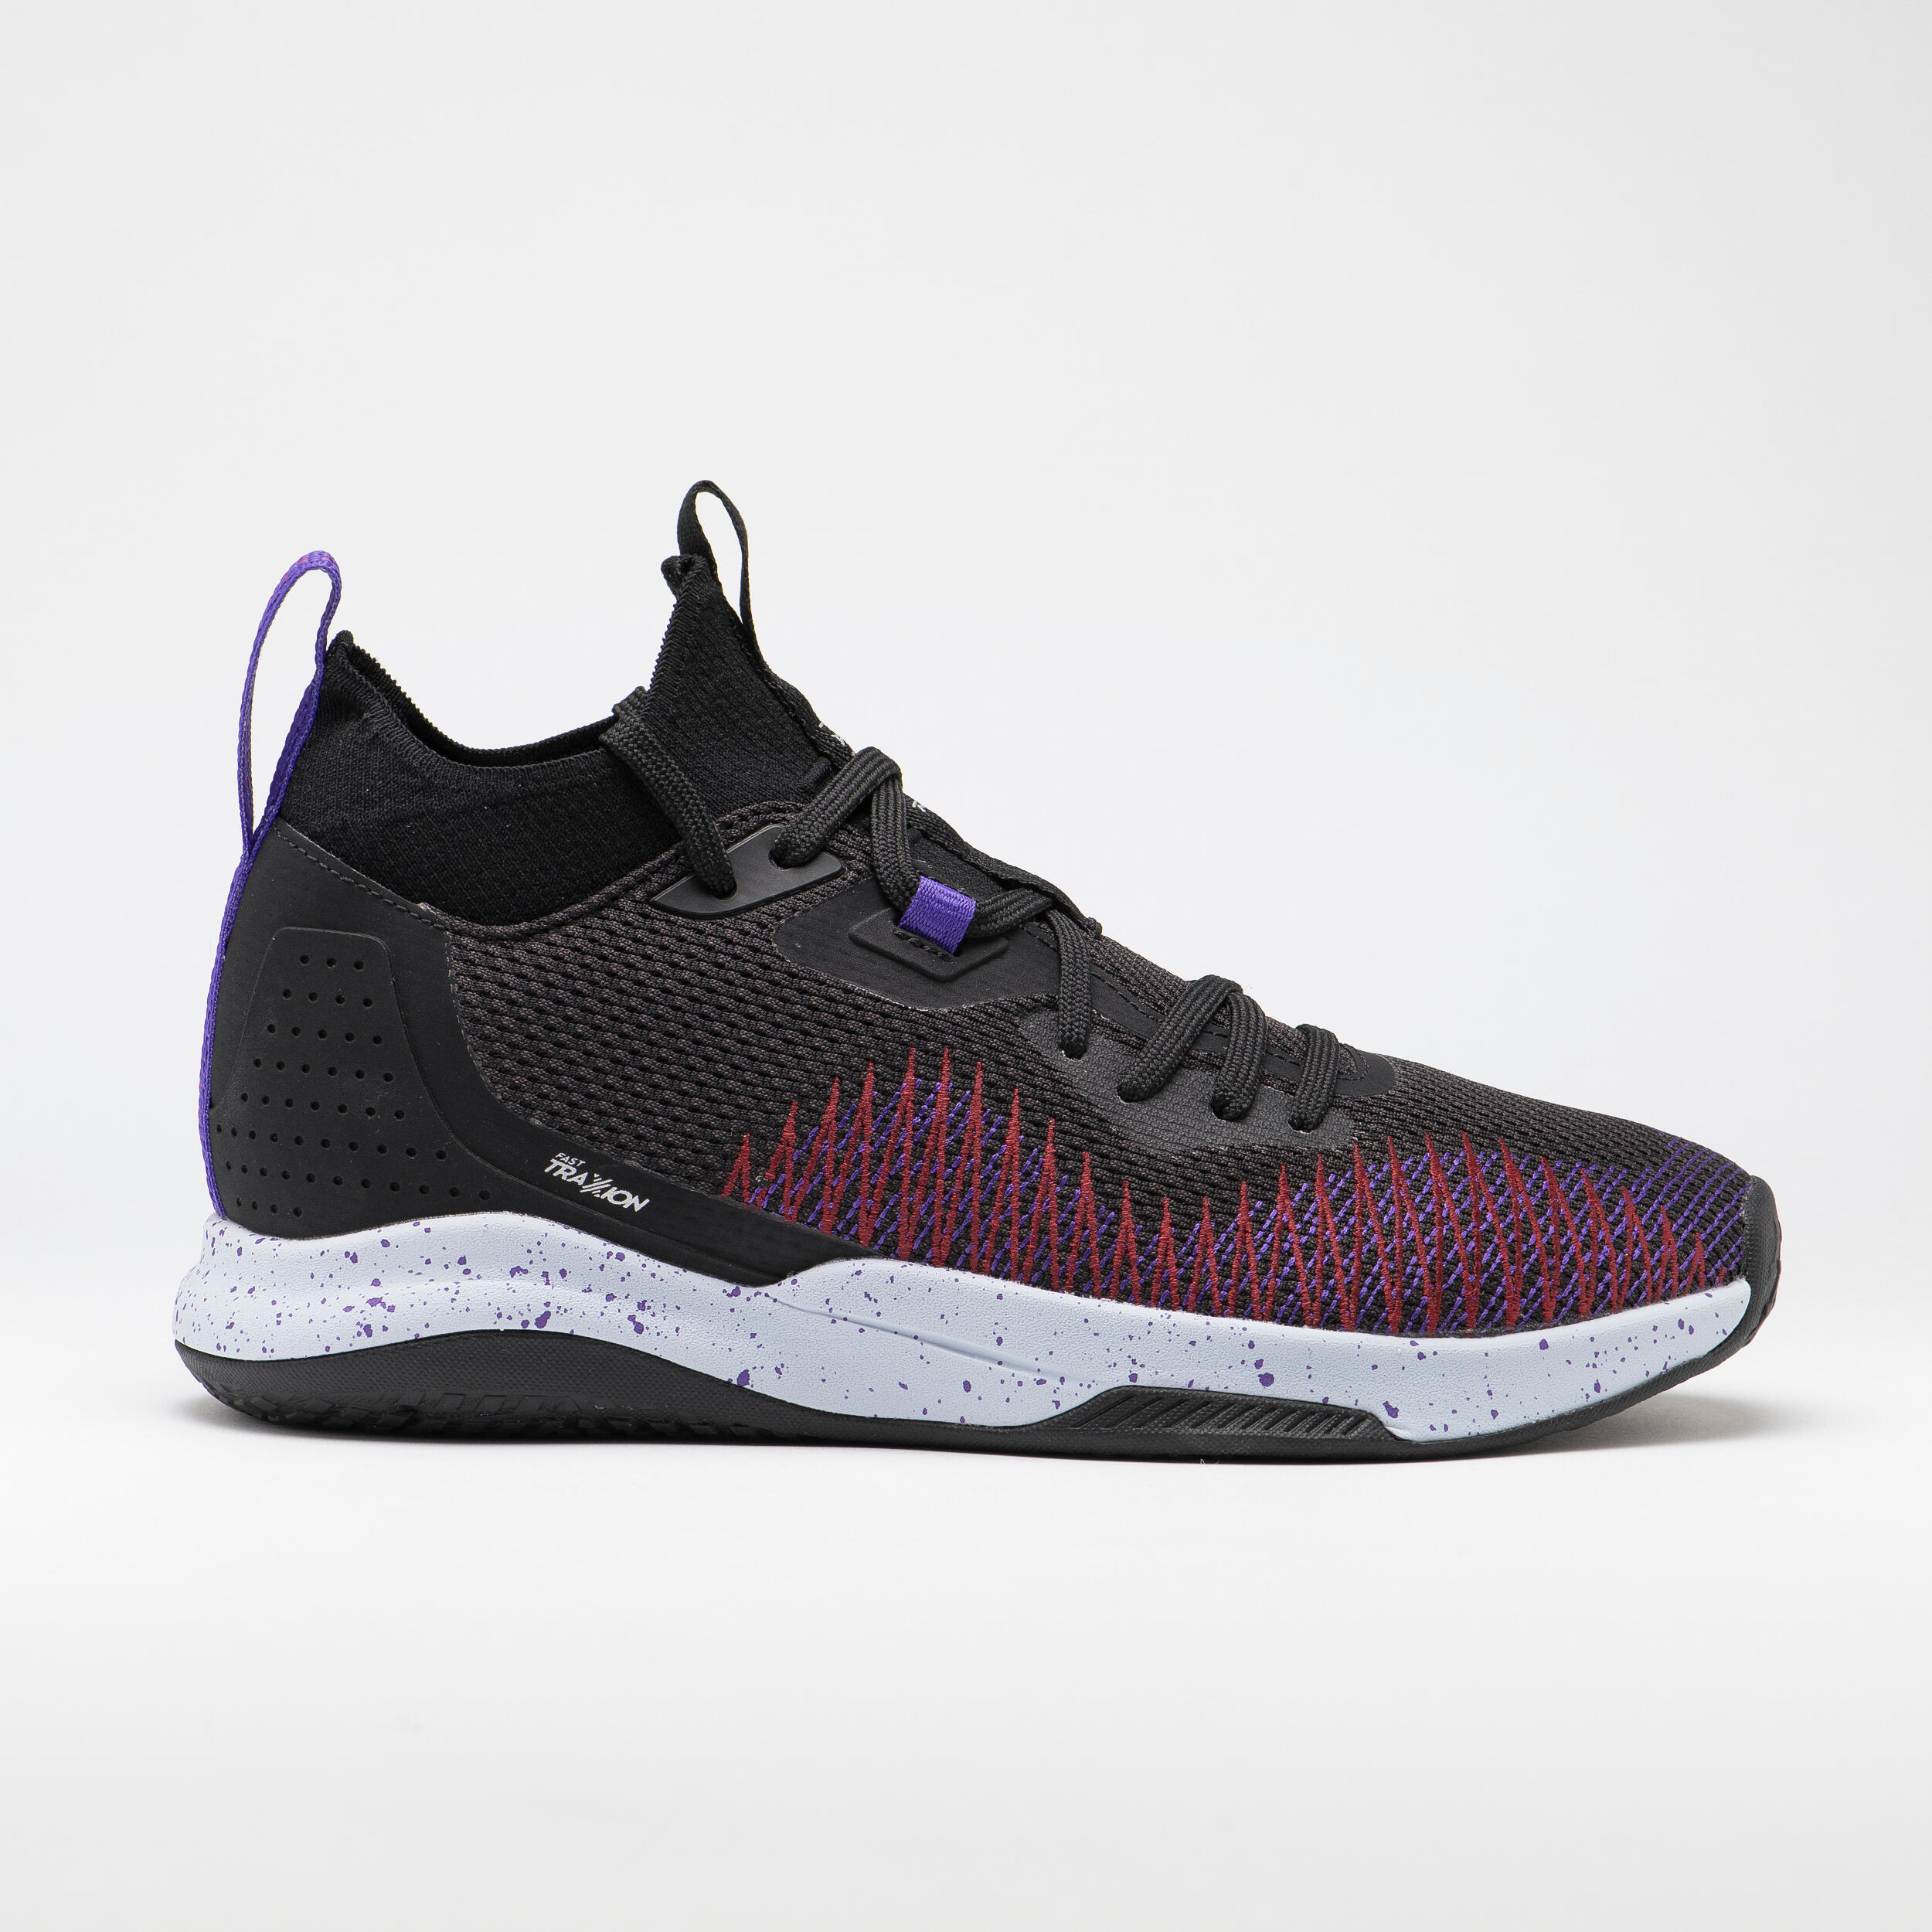 Women's Basketball Shoes Fast 500 - Black/Purple 1/8